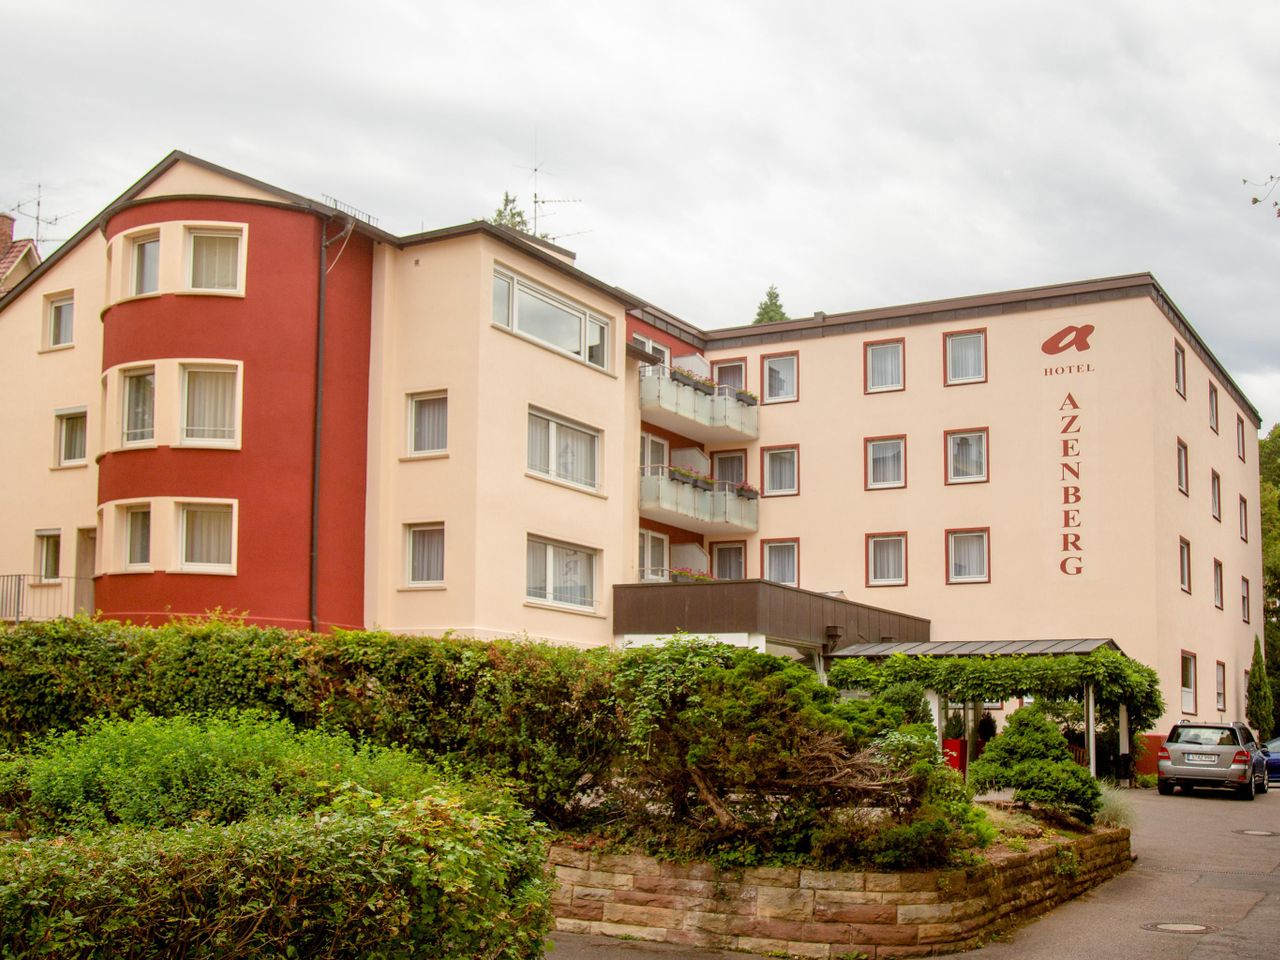 8 Tage im Hotel Azenberg Stuttgart 